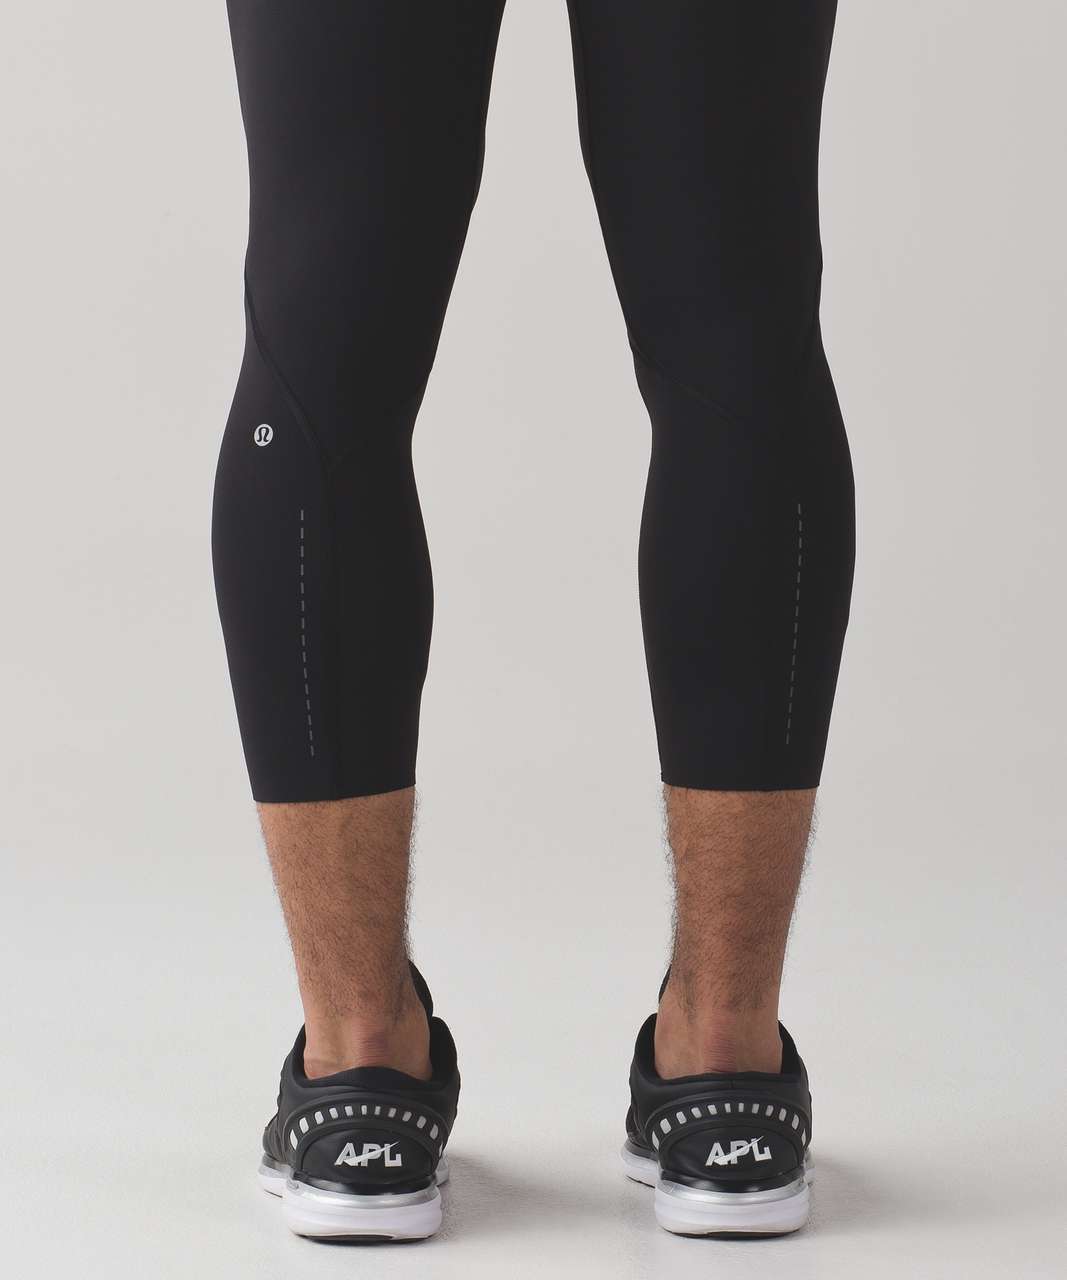 ❤️ NWT Lululemon Simply Bare Tight Pant Size 4 Black BLK Soft Nulu Tights -  RARE